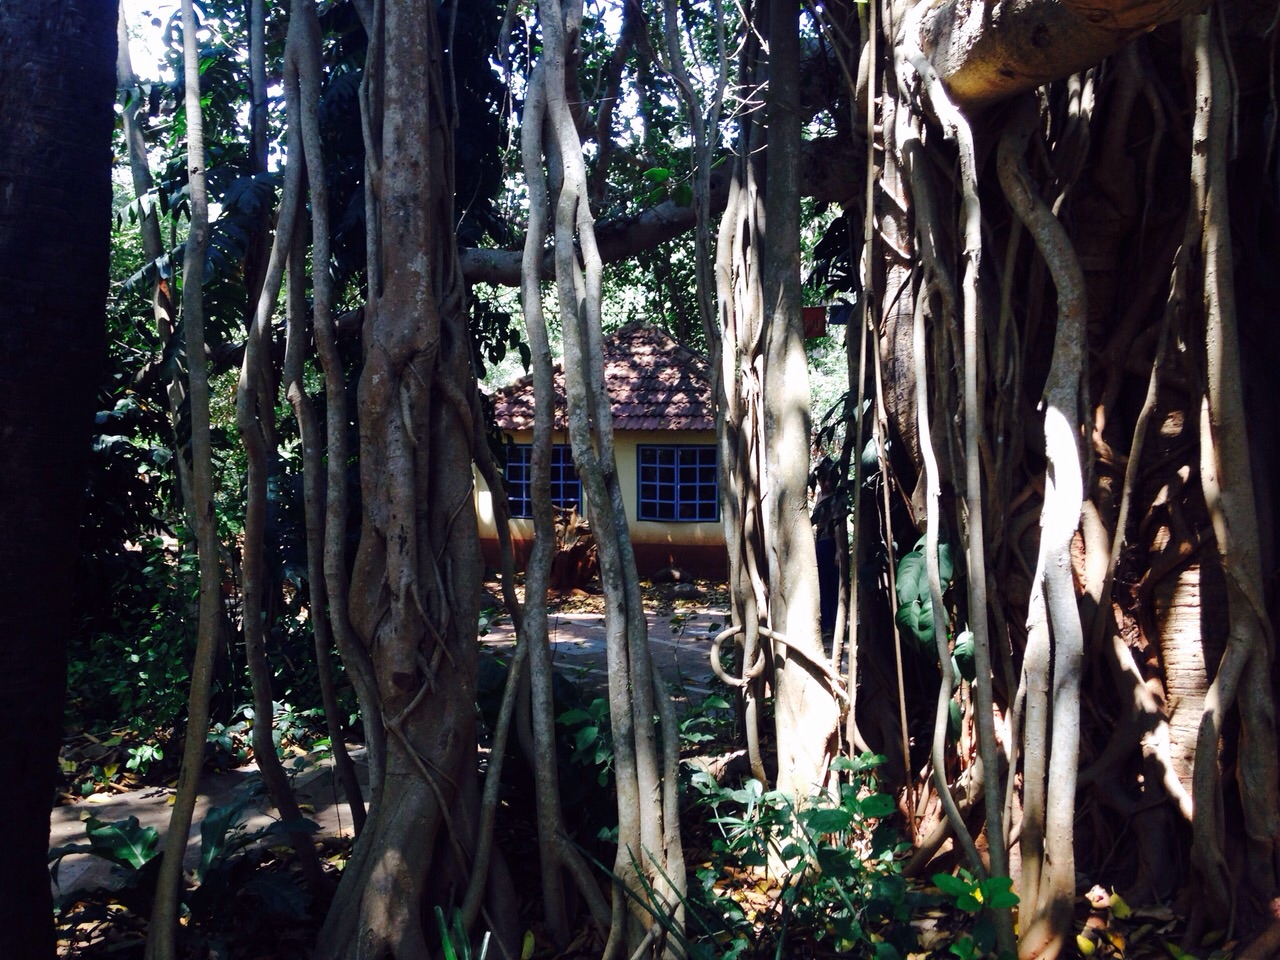 Banyan grove where the spirits live